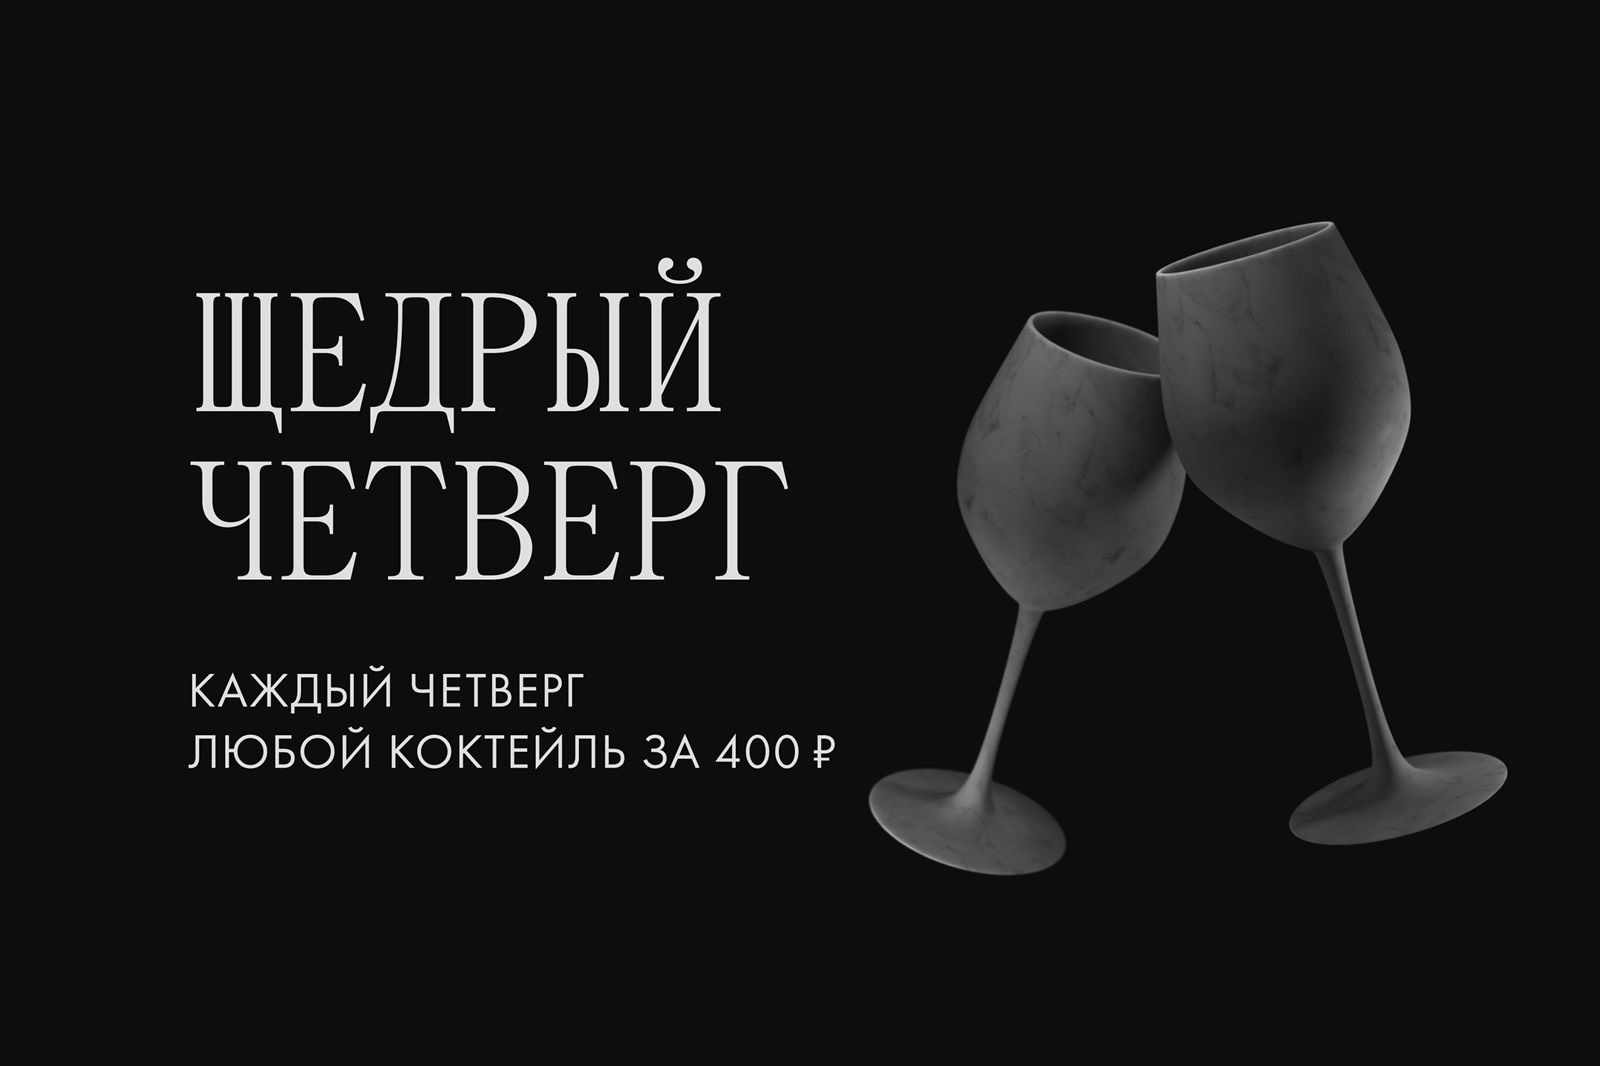 Любой коктейль за 400 руб. по четвергам в Tangiers Lounge Pokrovka - фотография № 1